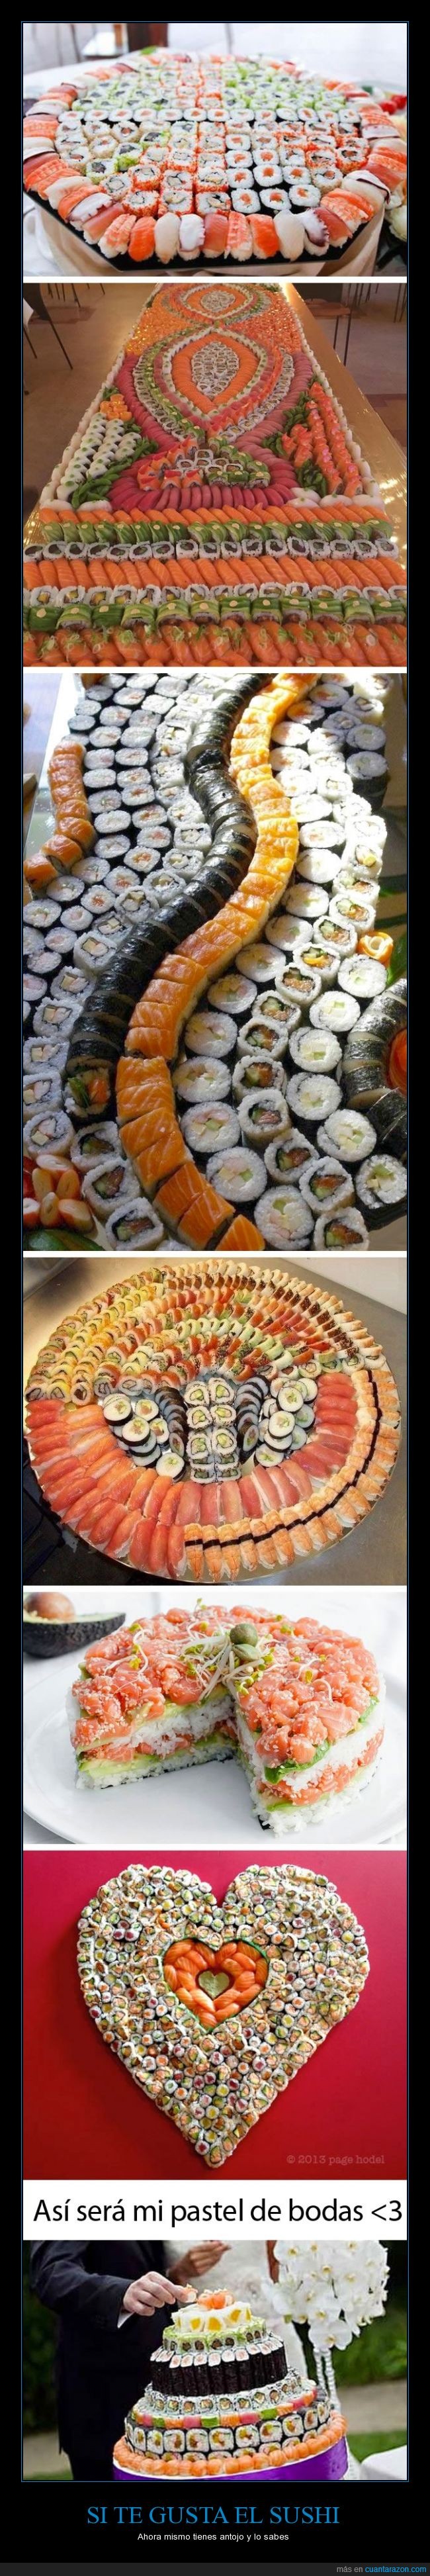 sushi,antojo,comer,comida,pastel,boda